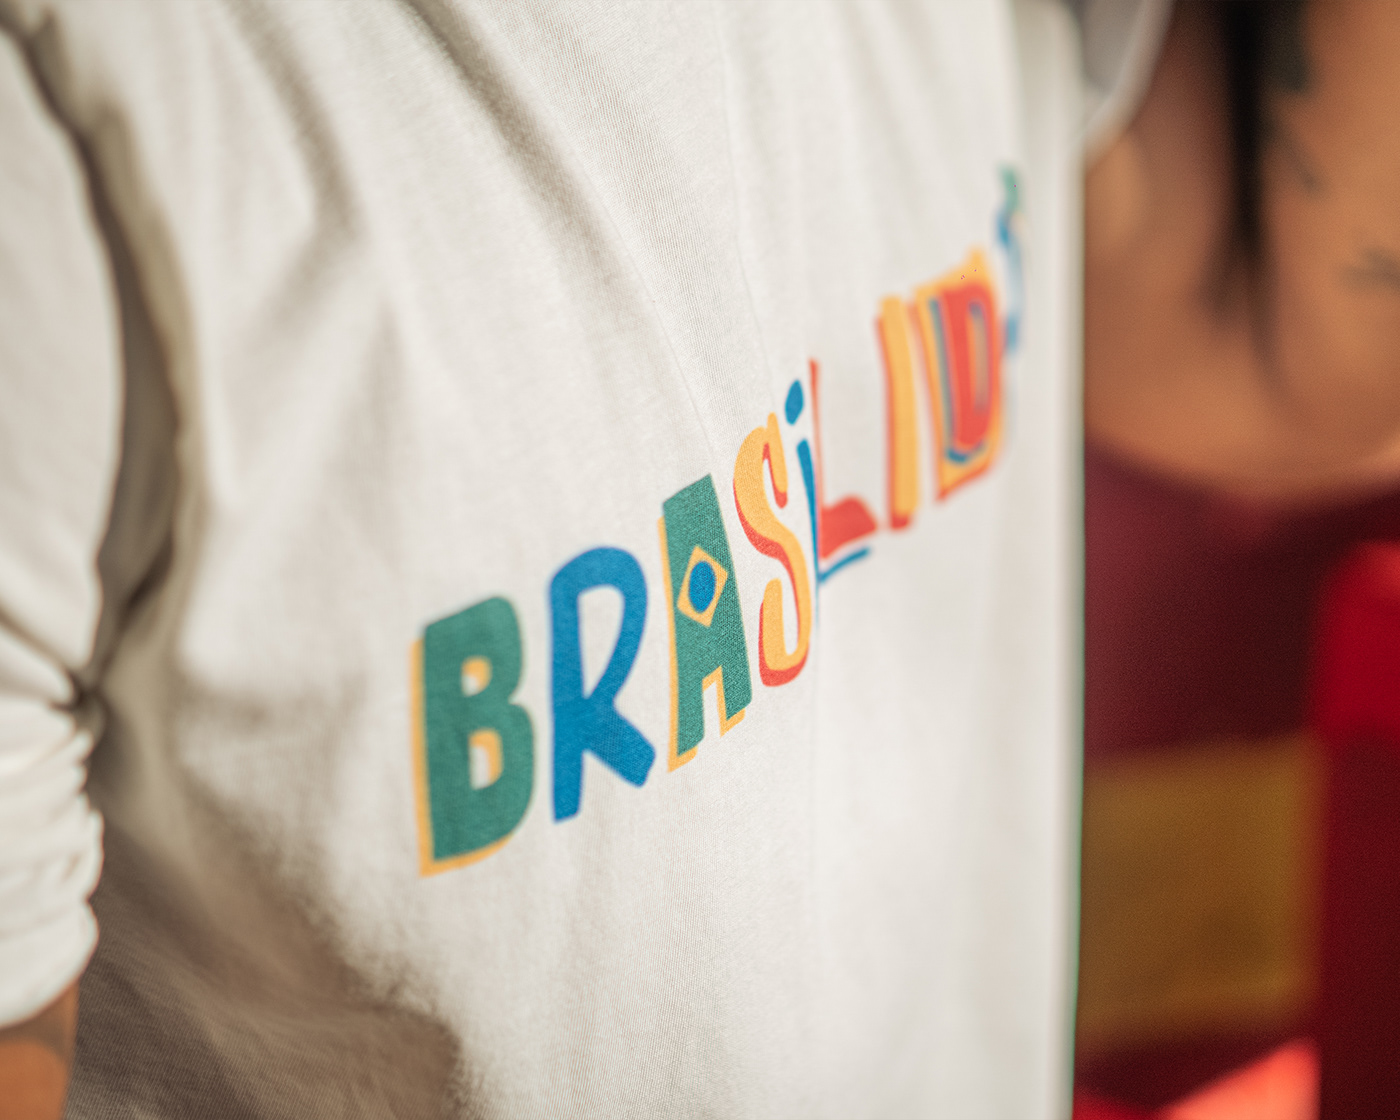 Brasil Brazil design design gráfico designer ILLUSTRATION  tipografia vernacular